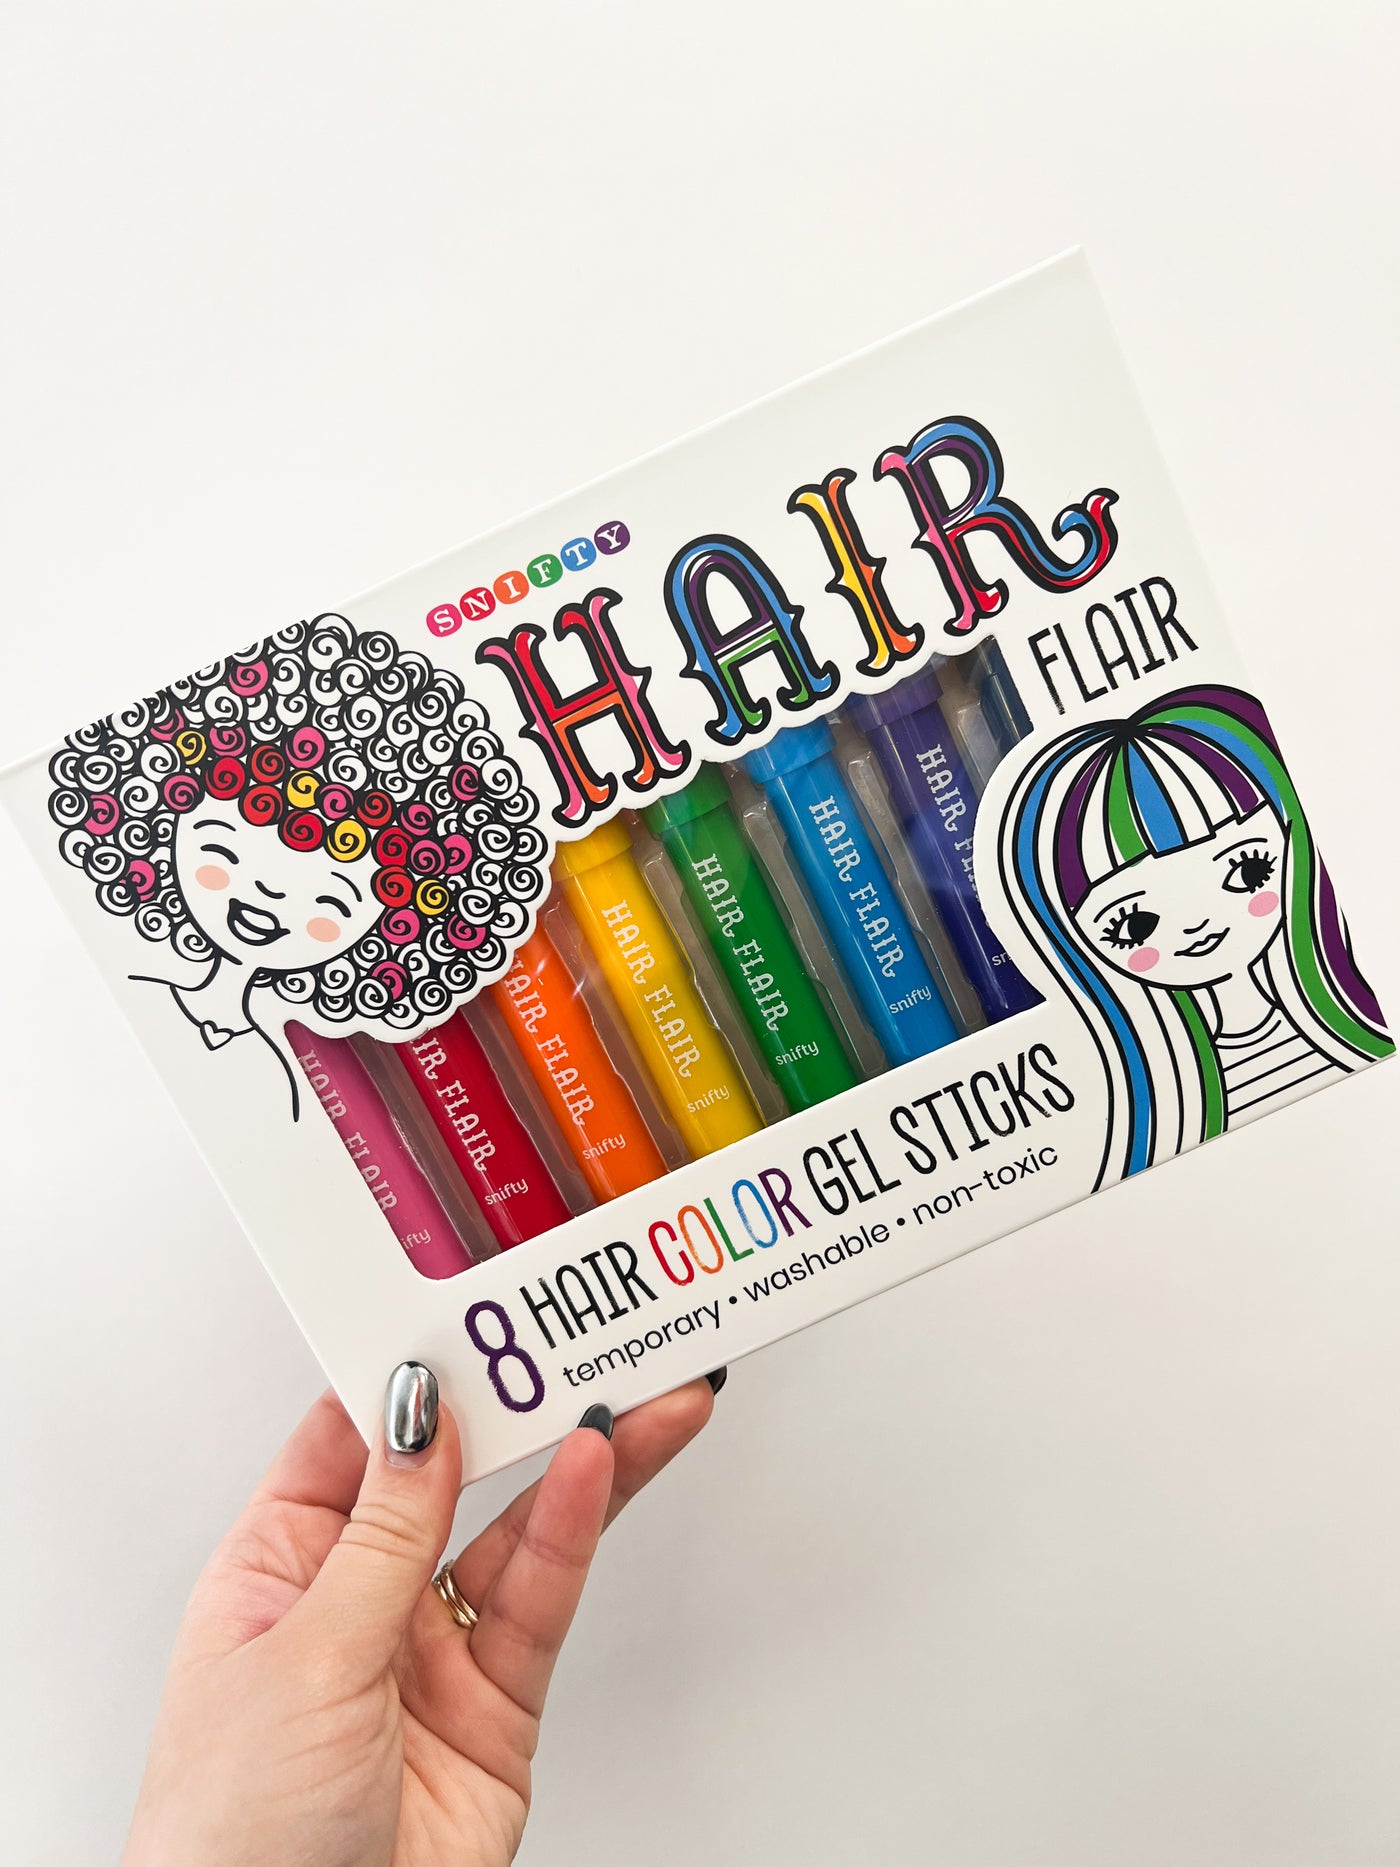 Hair Flair - Hair Color Gel Stick Set